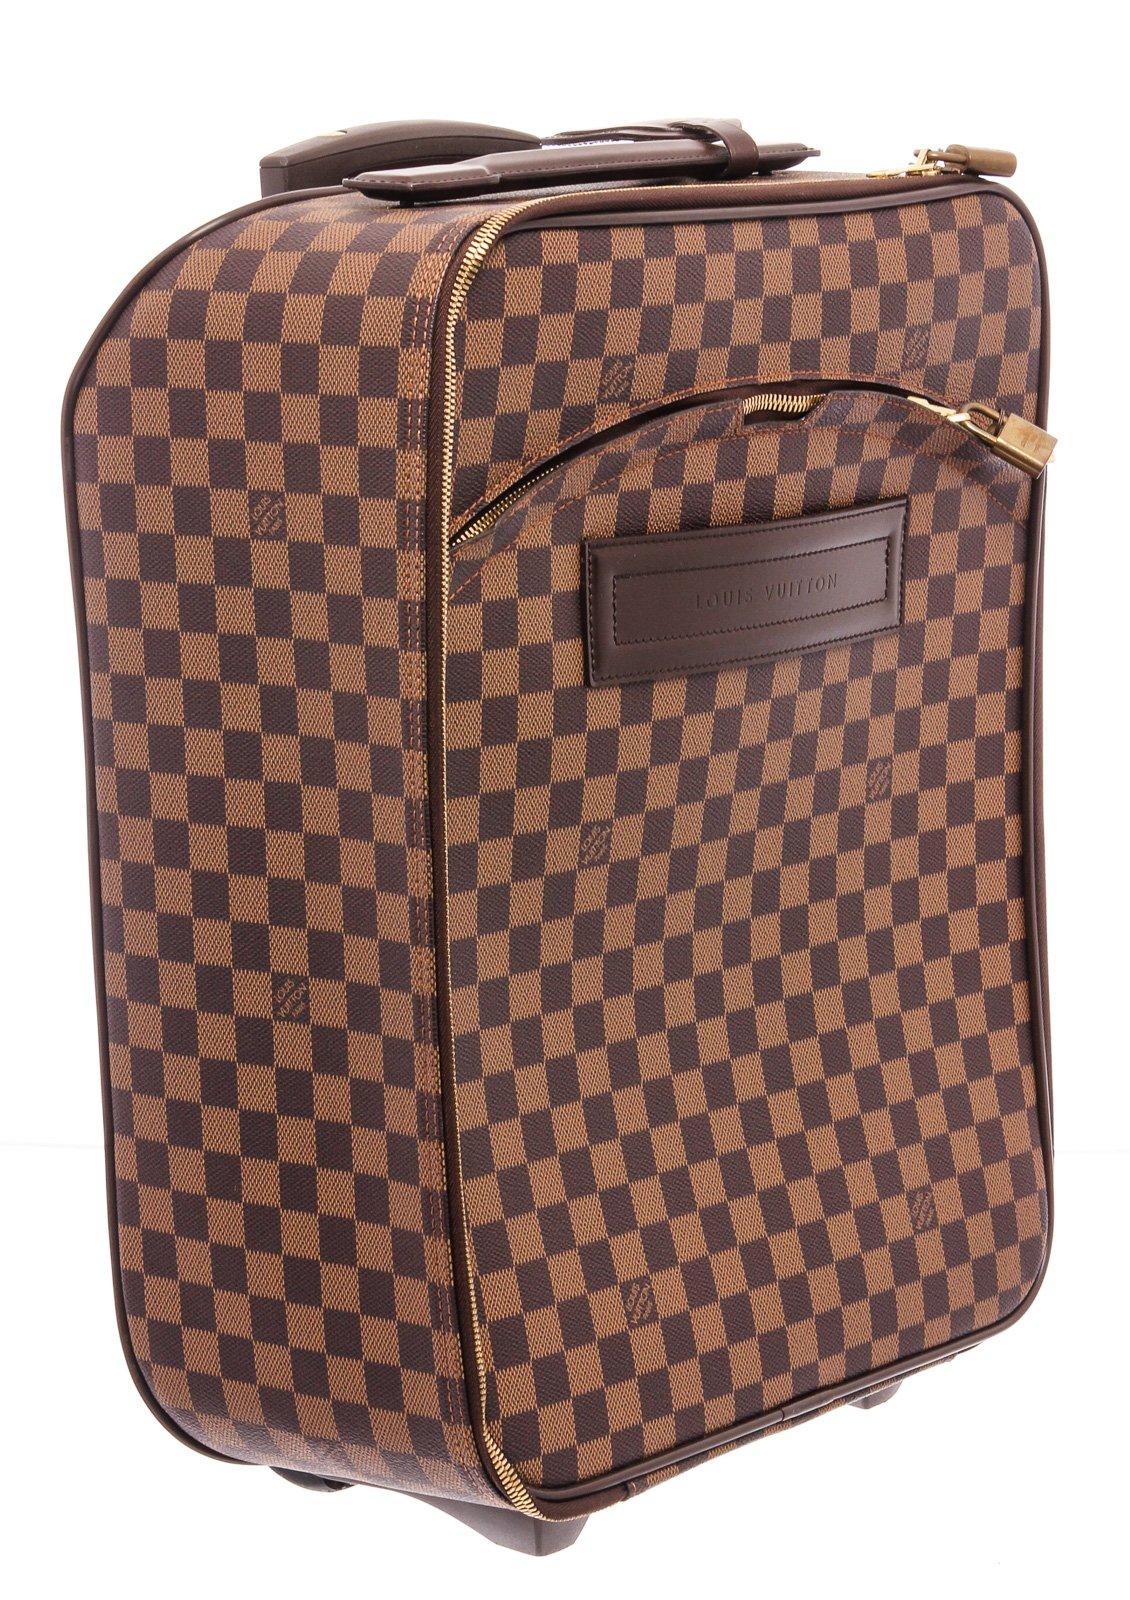 Louis Vuitton Damier Ebene Canvas Leather Pegase 45 cm Luggage 2